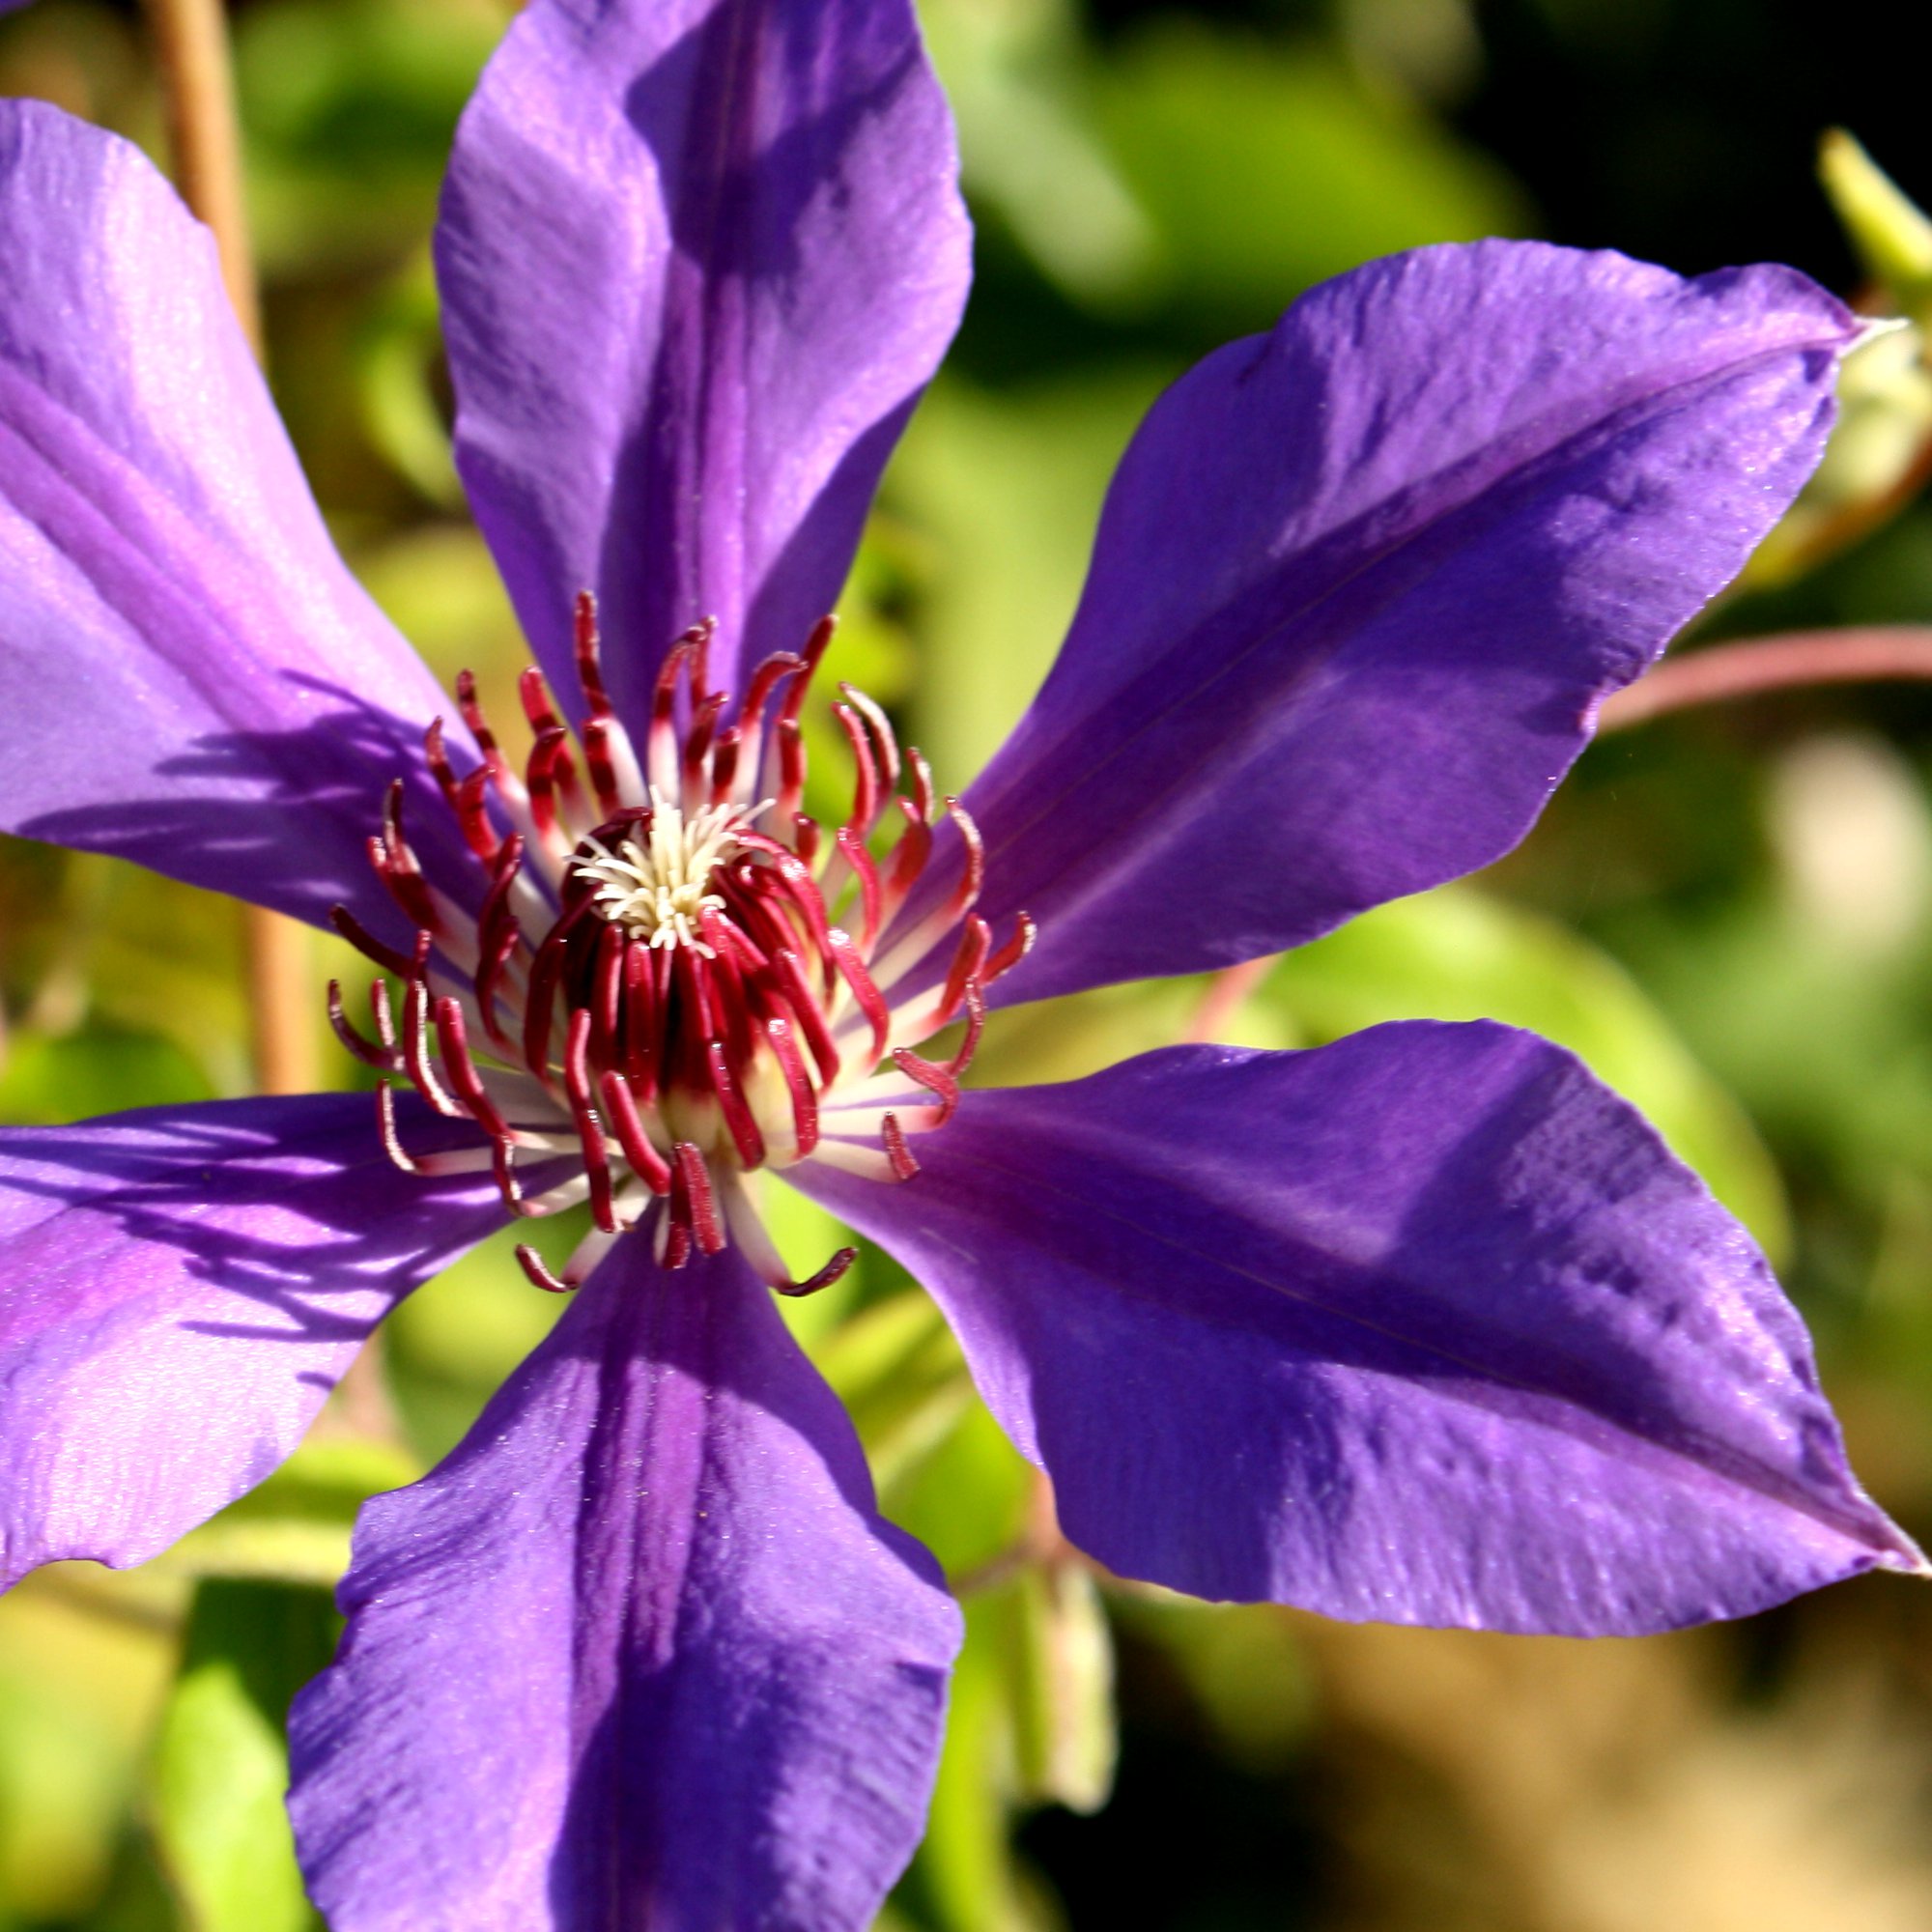 Purple Clematis Flower Closeup Picture | Free Photograph | Photos ...